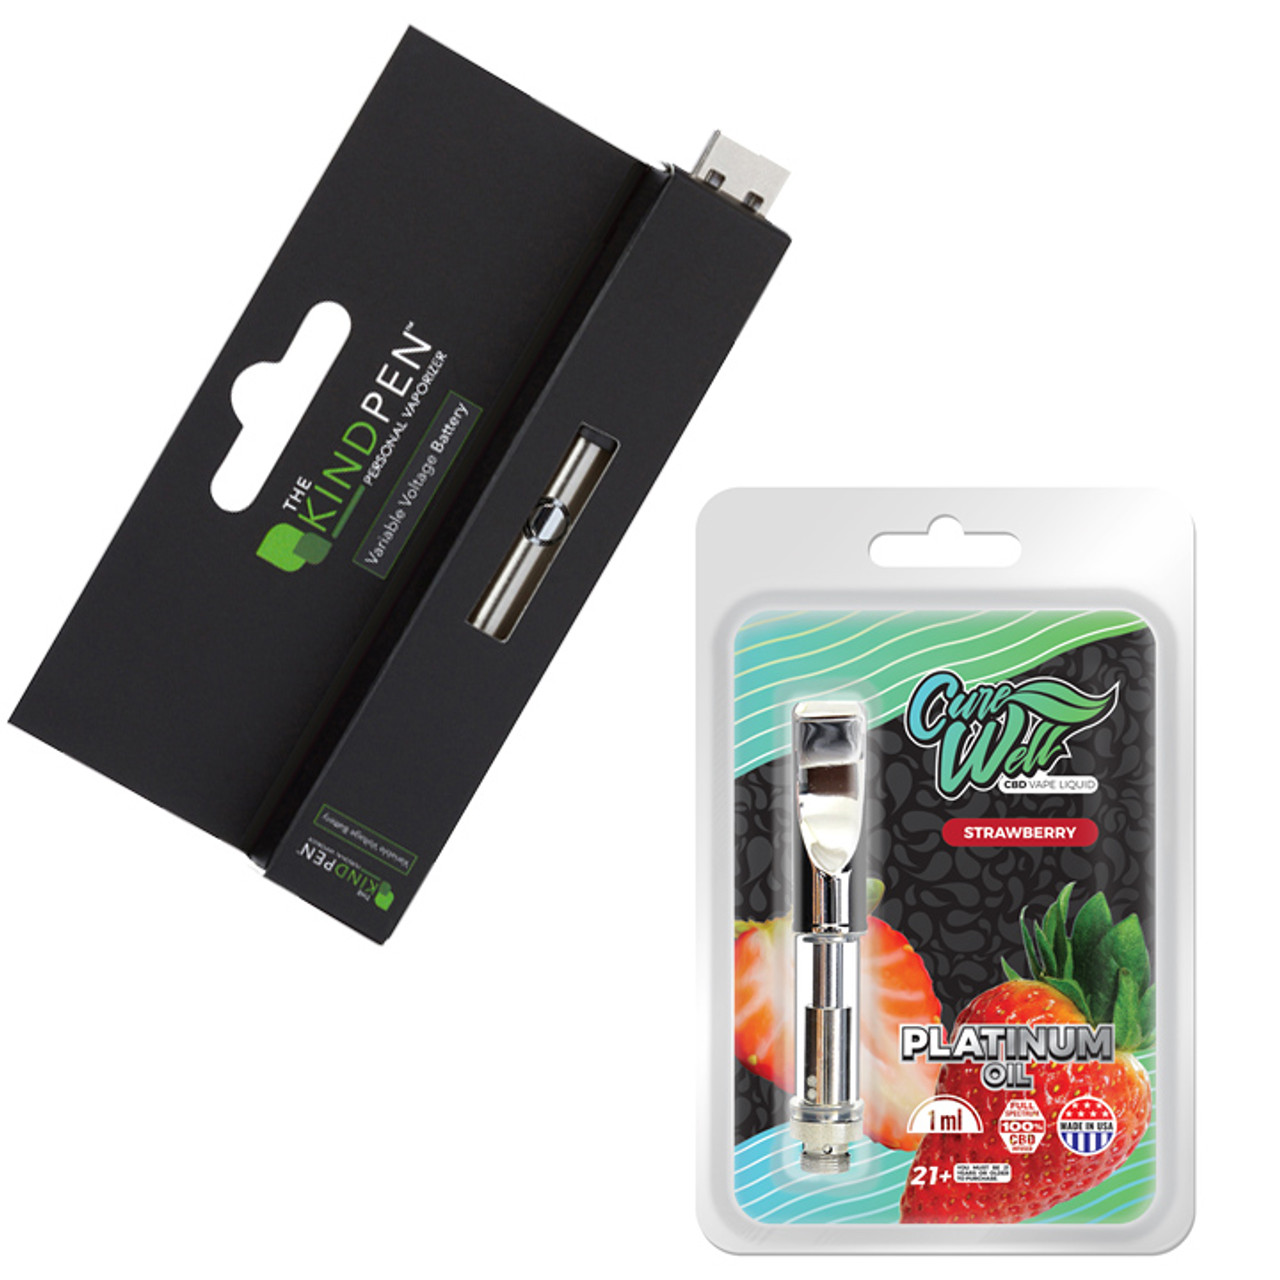 CureWell Platinum Isolate Cartridge + Kind Pen